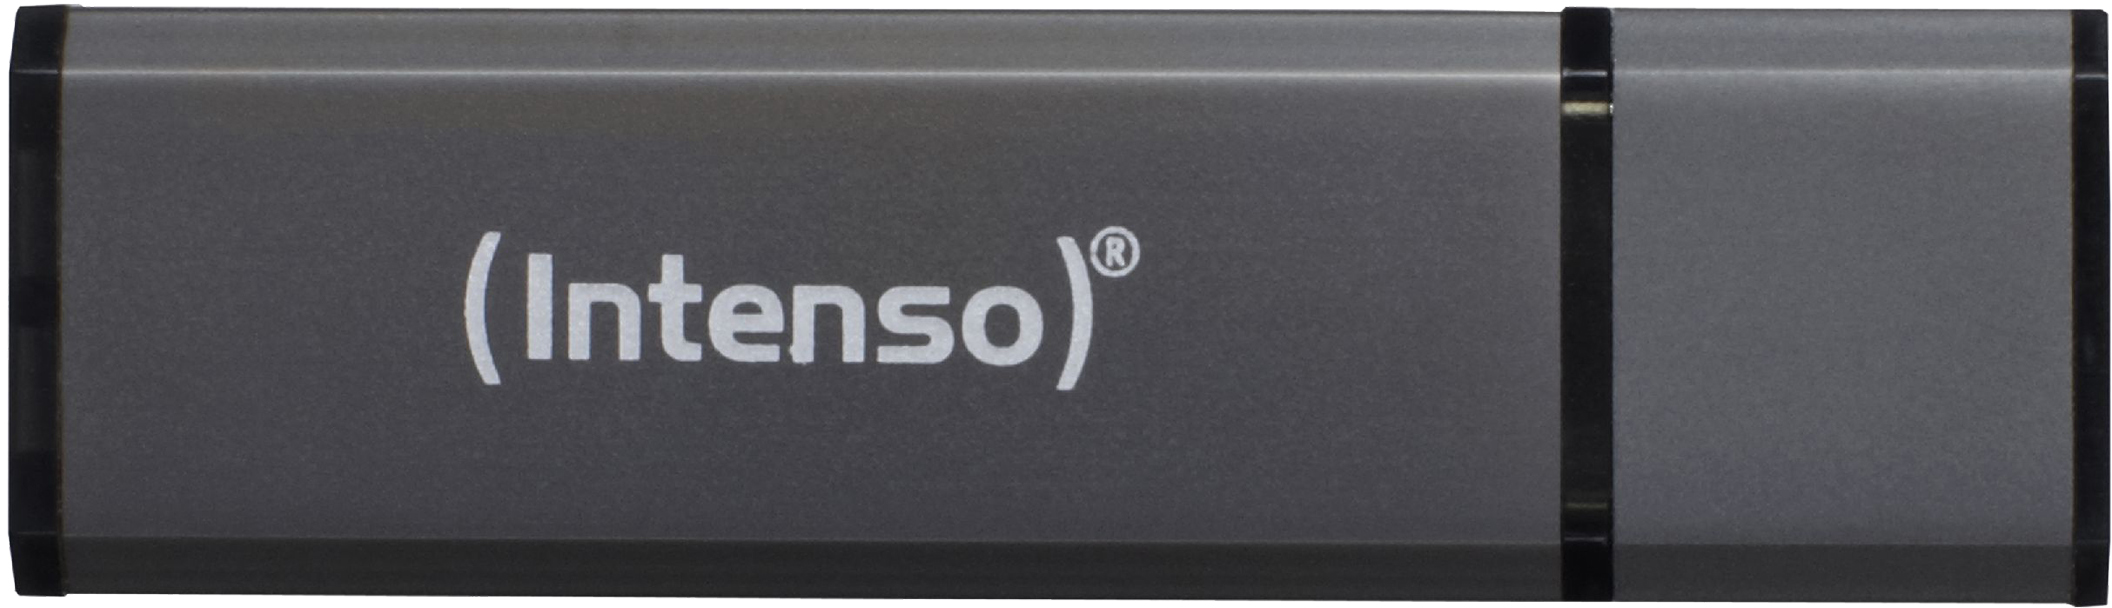 Anthrazit Alu MB/s, 64 INTENSO GB, 28 USB-Stick, Line